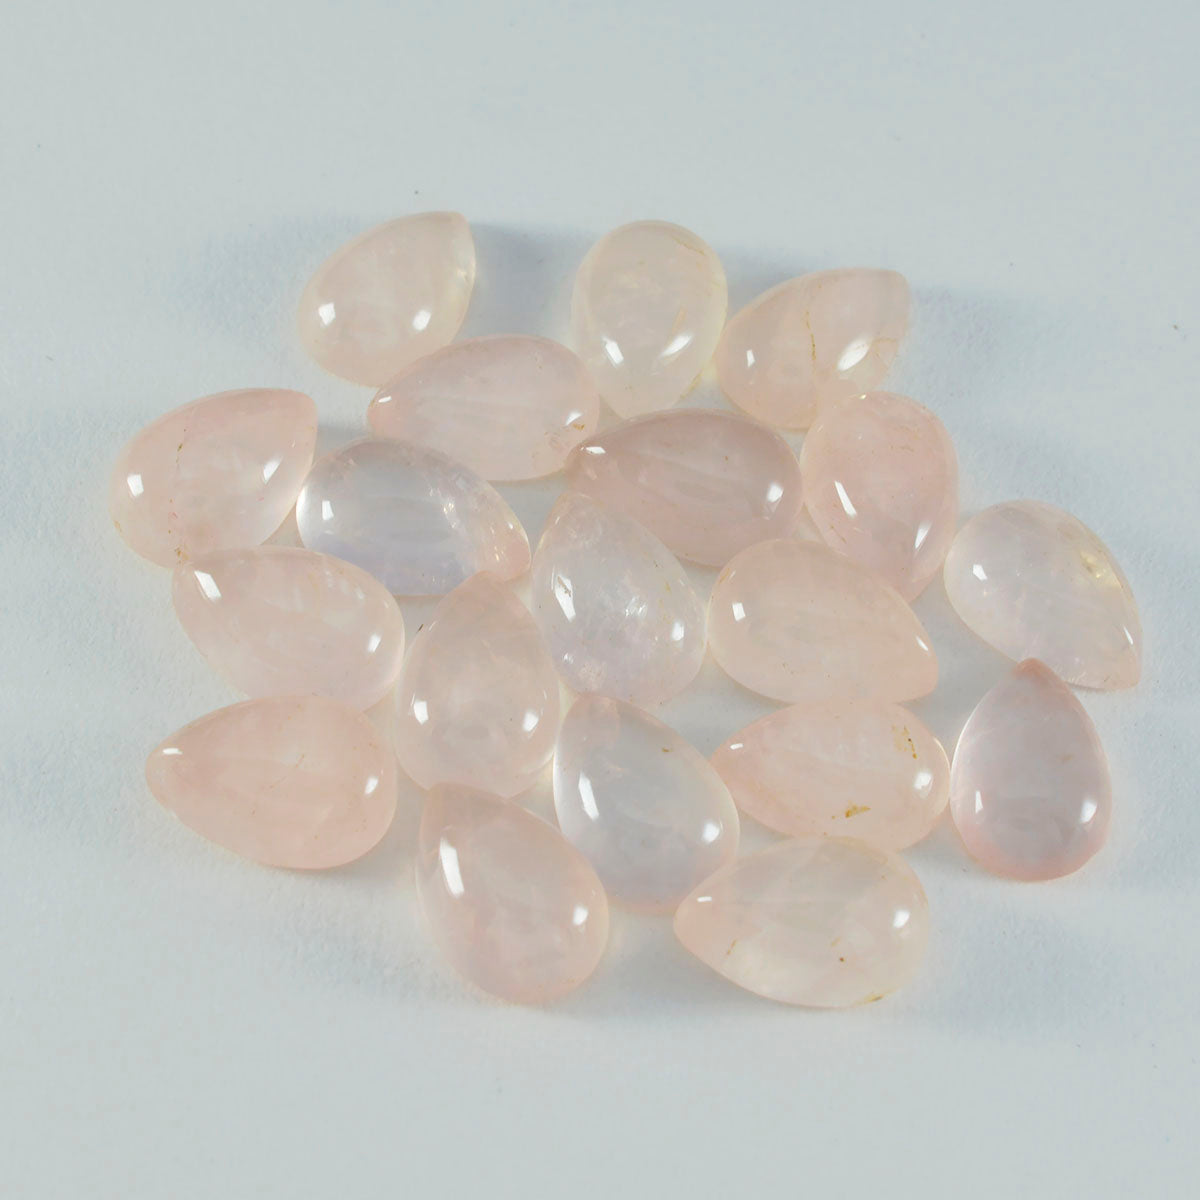 Riyogems 1PC Pink Rose Quartz Cabochon 8x12 mm Pear Shape cute Quality Loose Gemstone